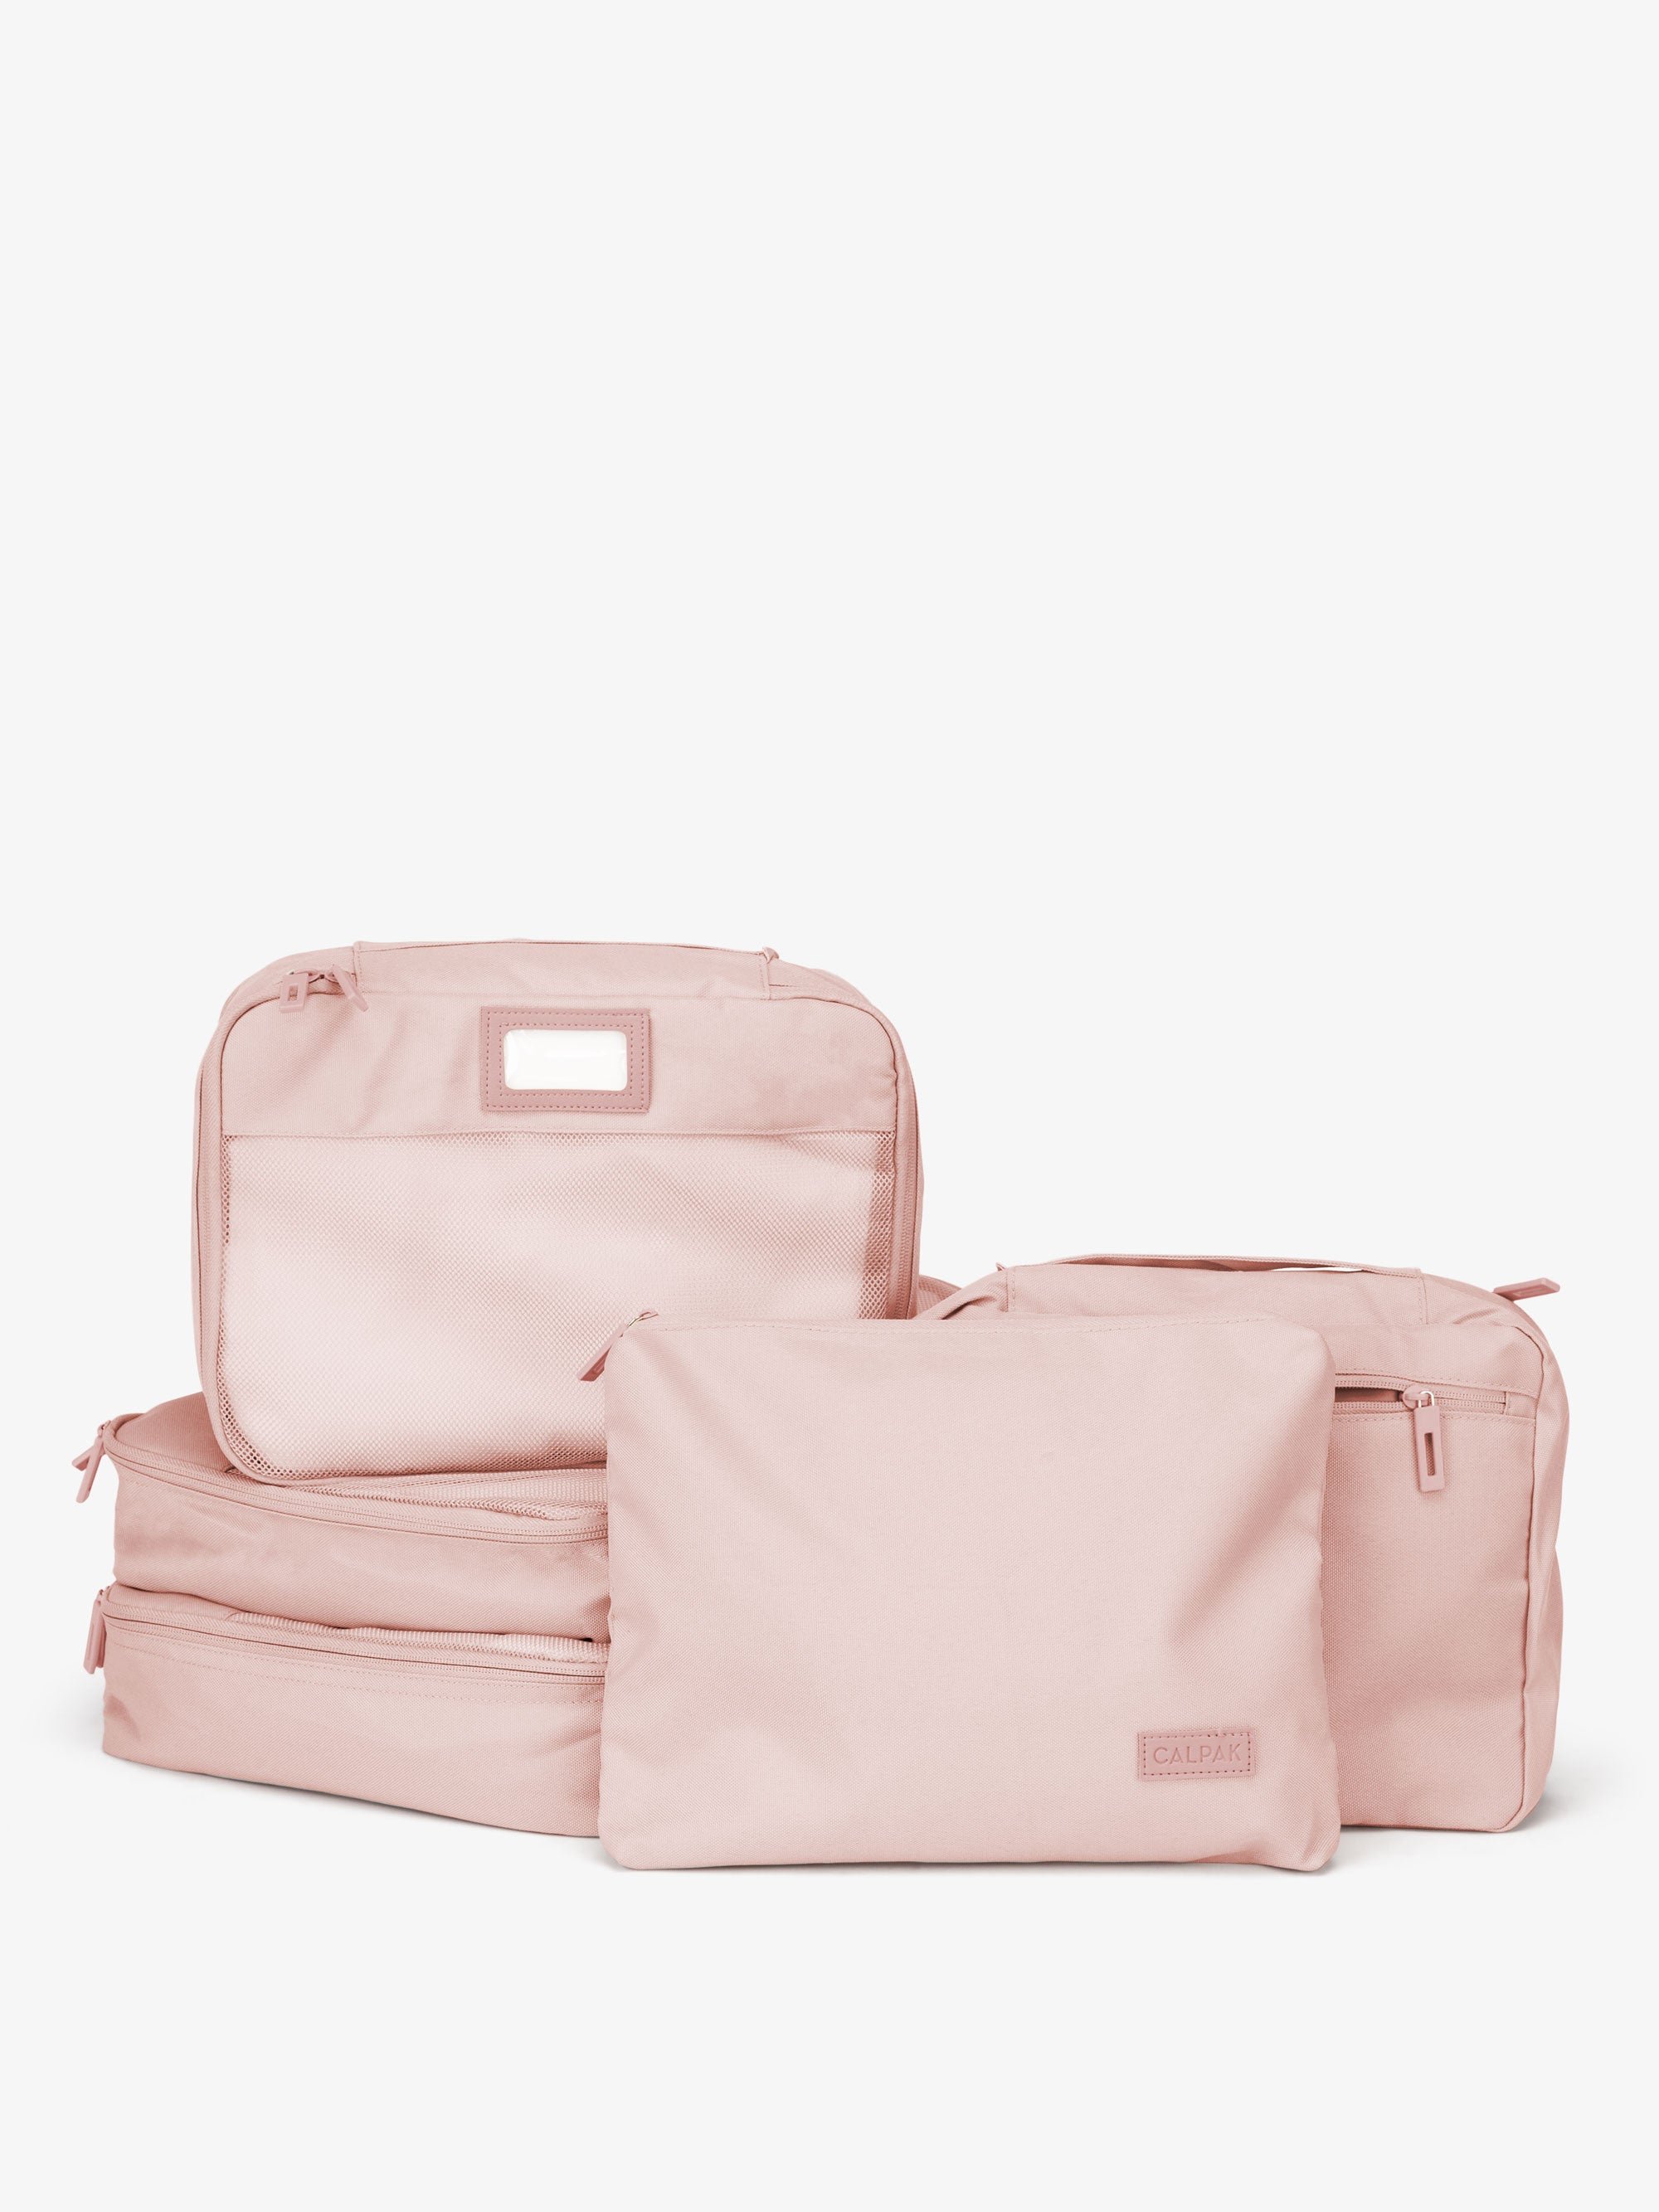 CALPAK's packing cube set in pink